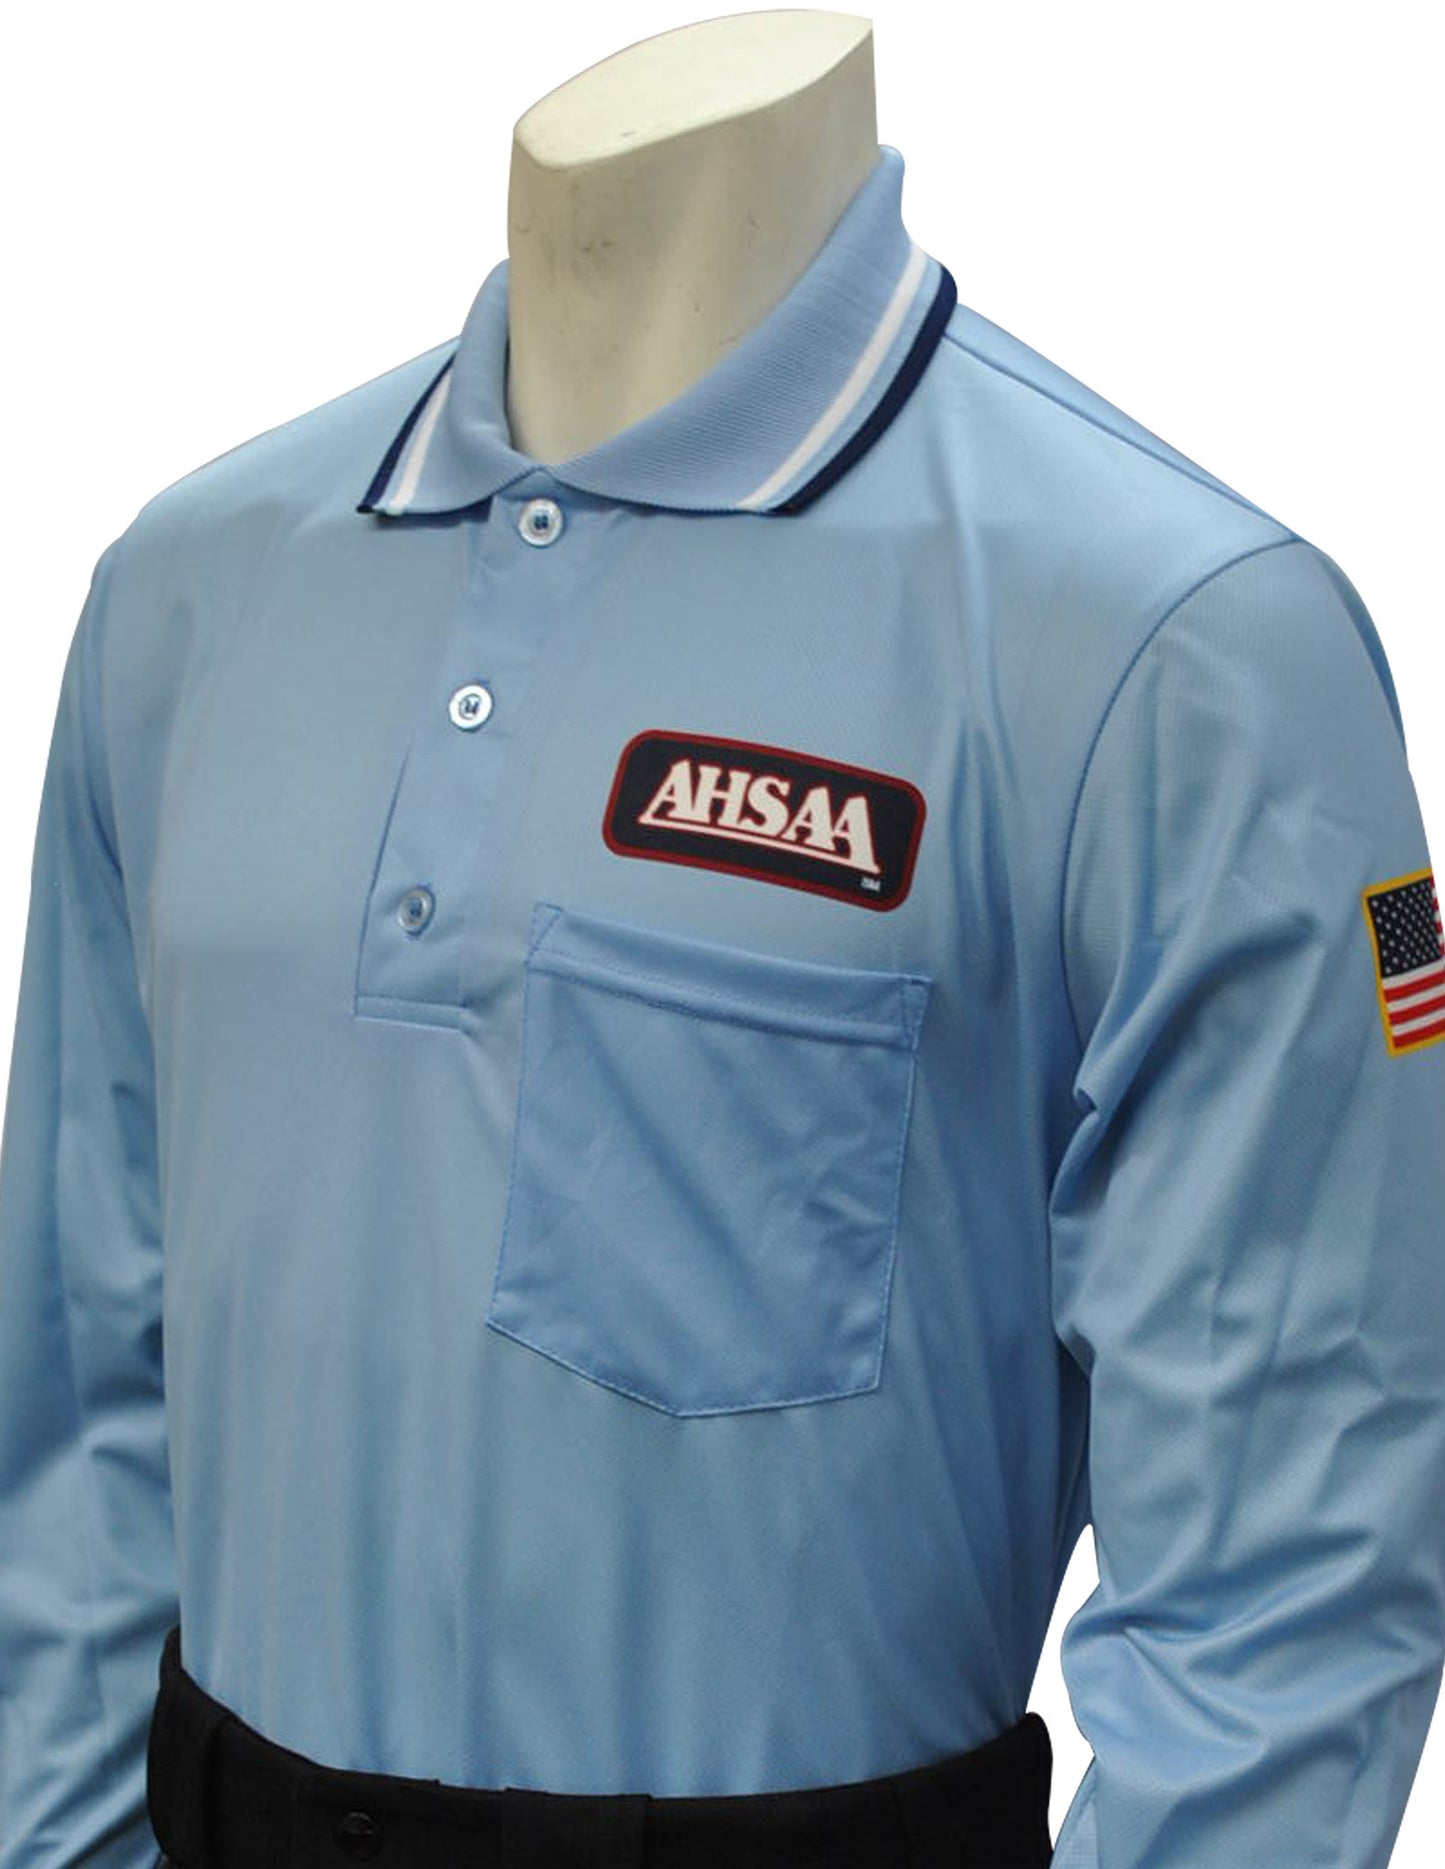 USA301AL- Dye Sub Alabama Baseball Long Sleeve Shirt - Available in Navy and Powder Blue